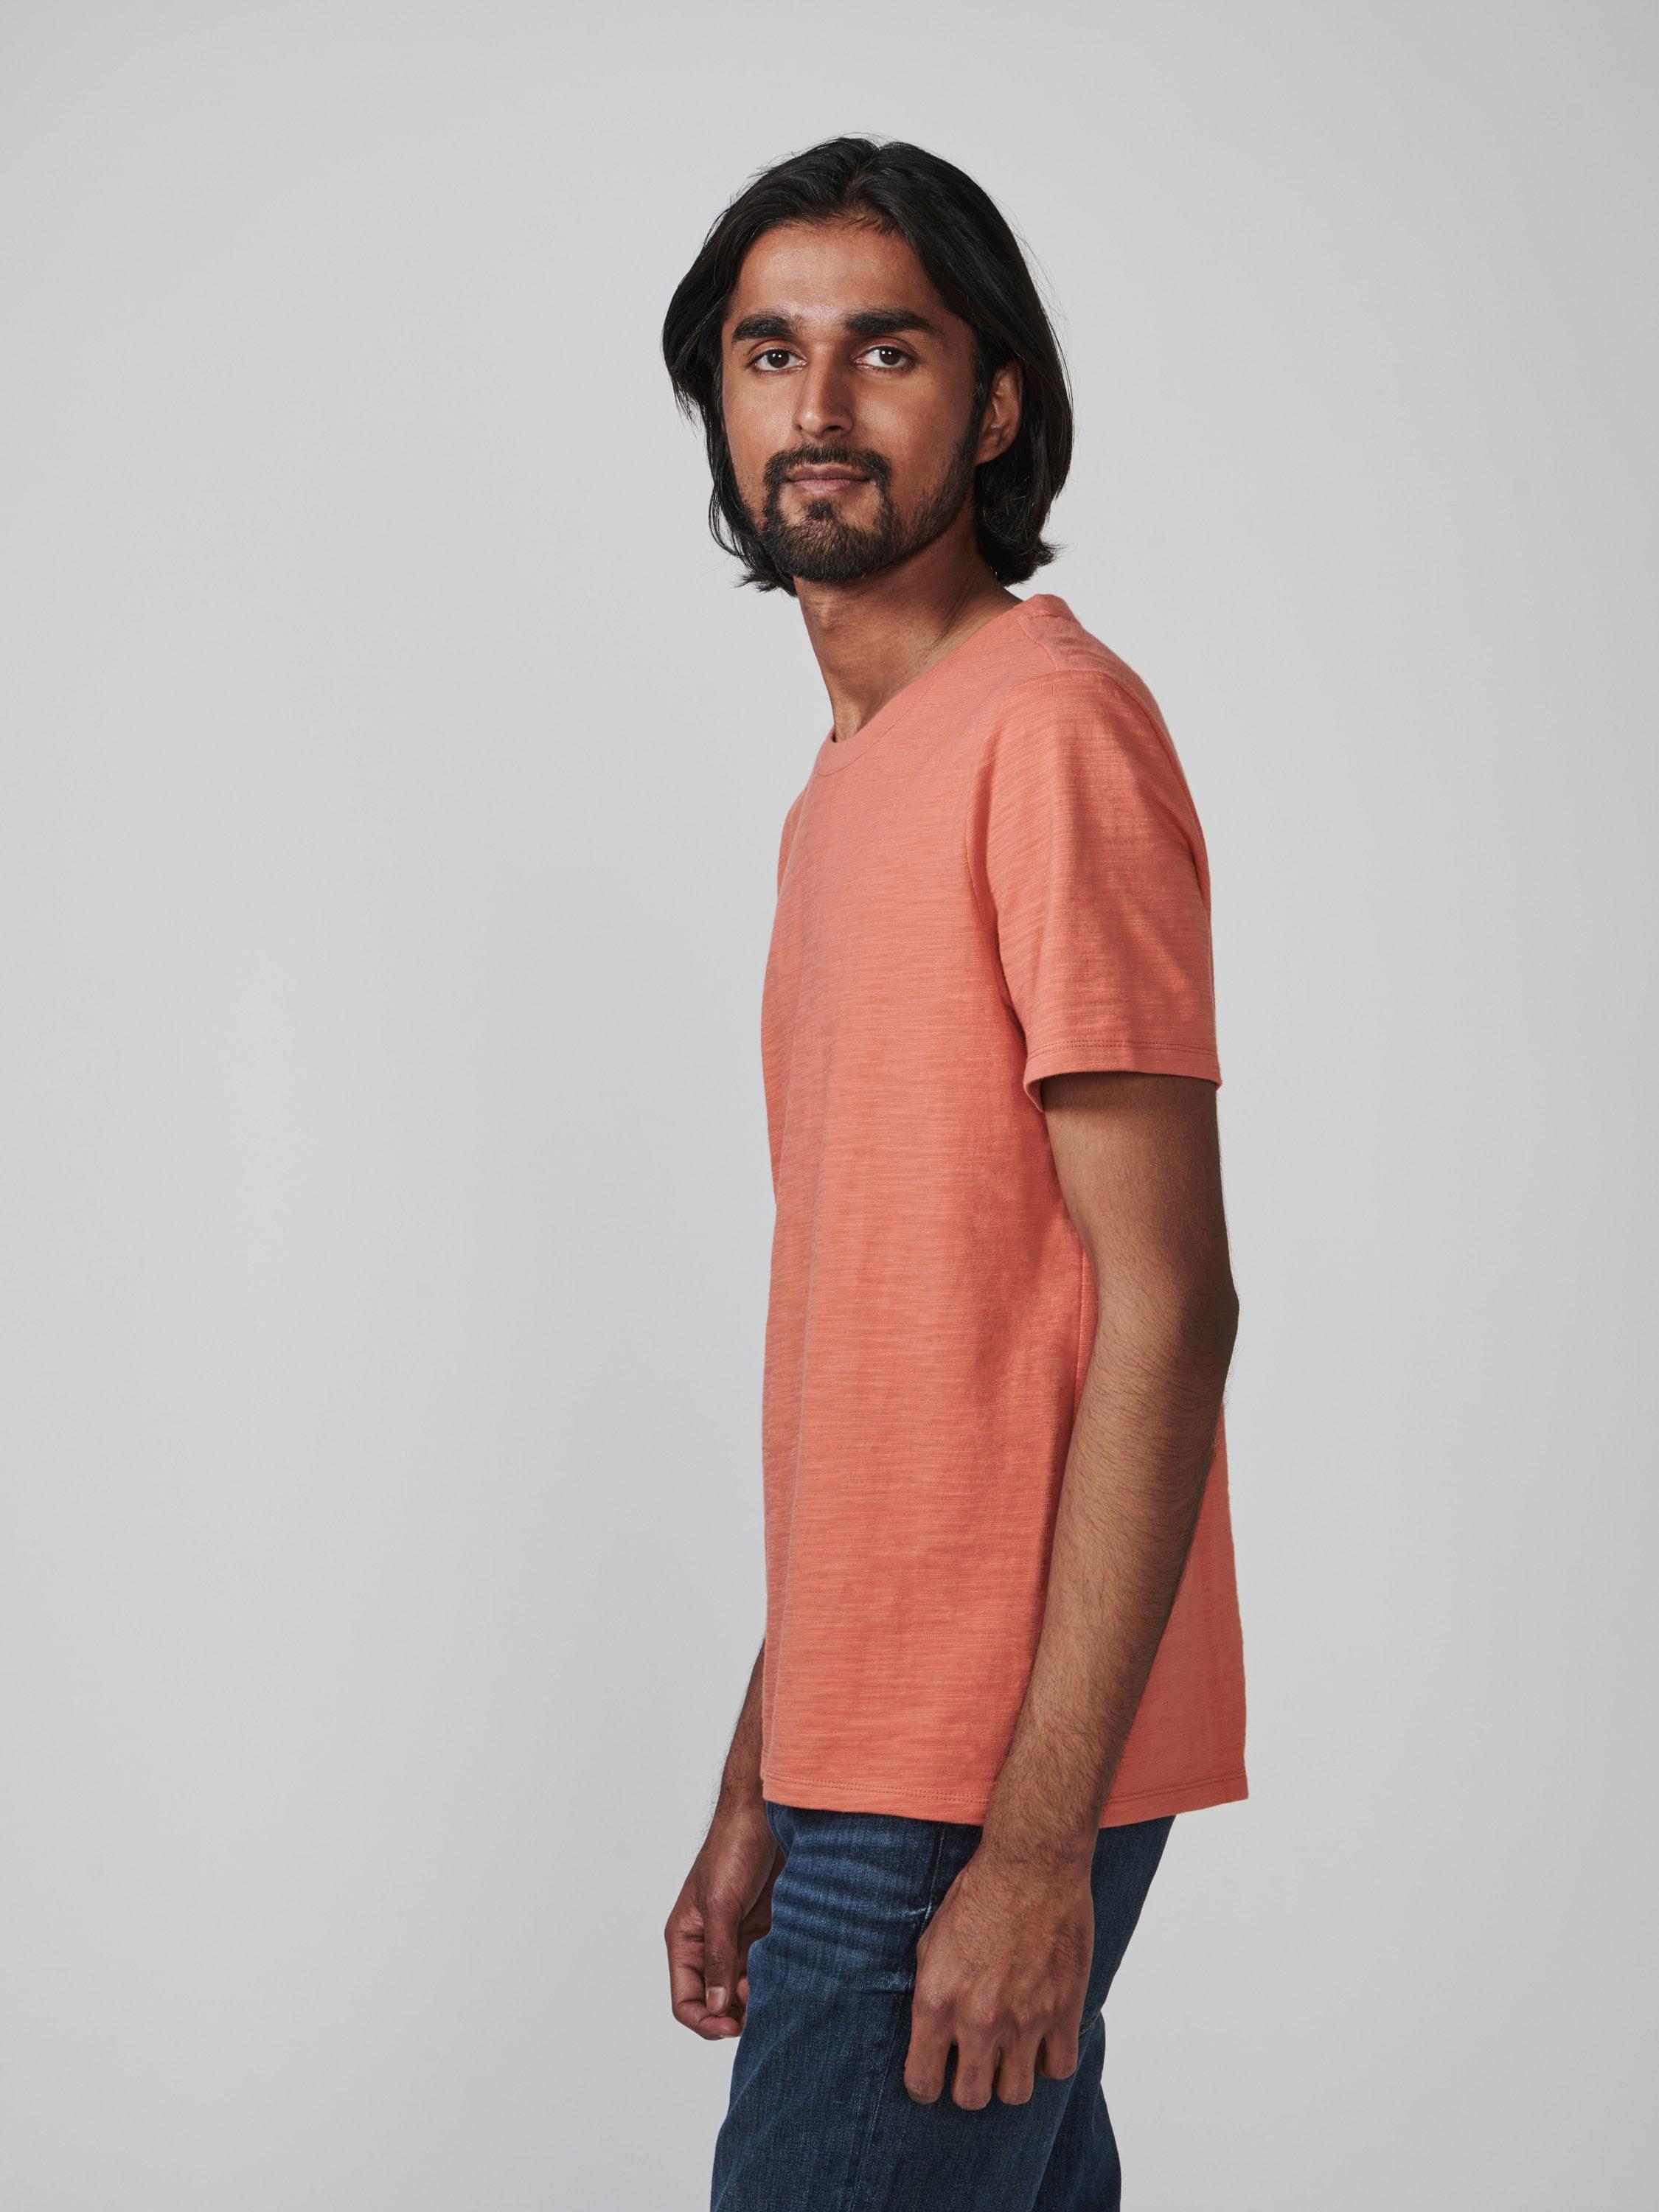 Cotton Slub Jersey Crewneck T-Shirt - Apricot